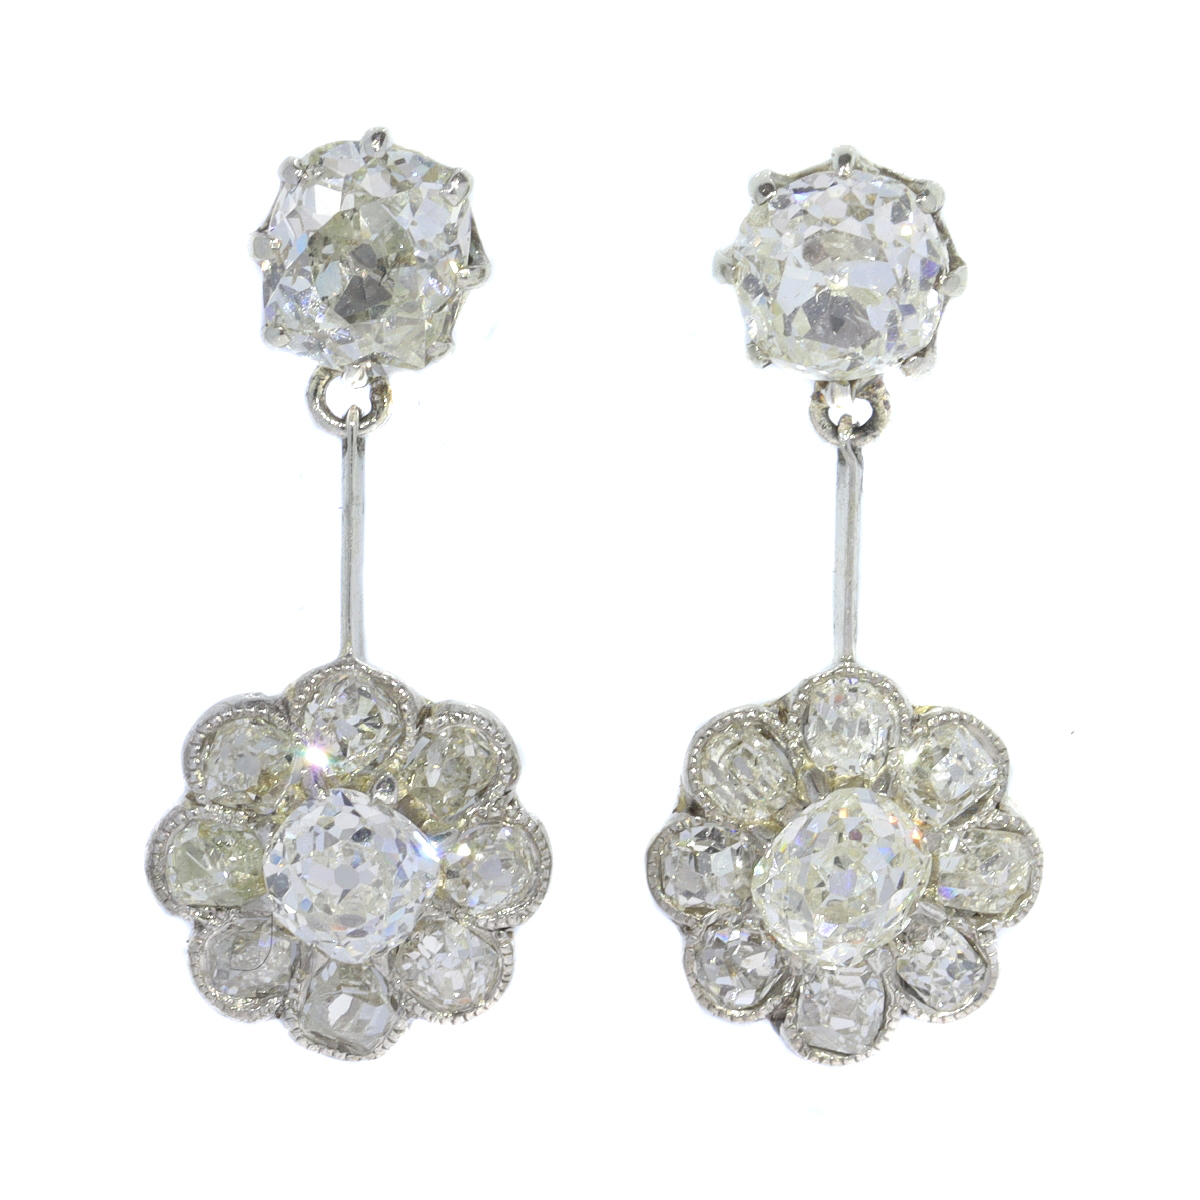 Platinum Art Deco pendant diamond earrings